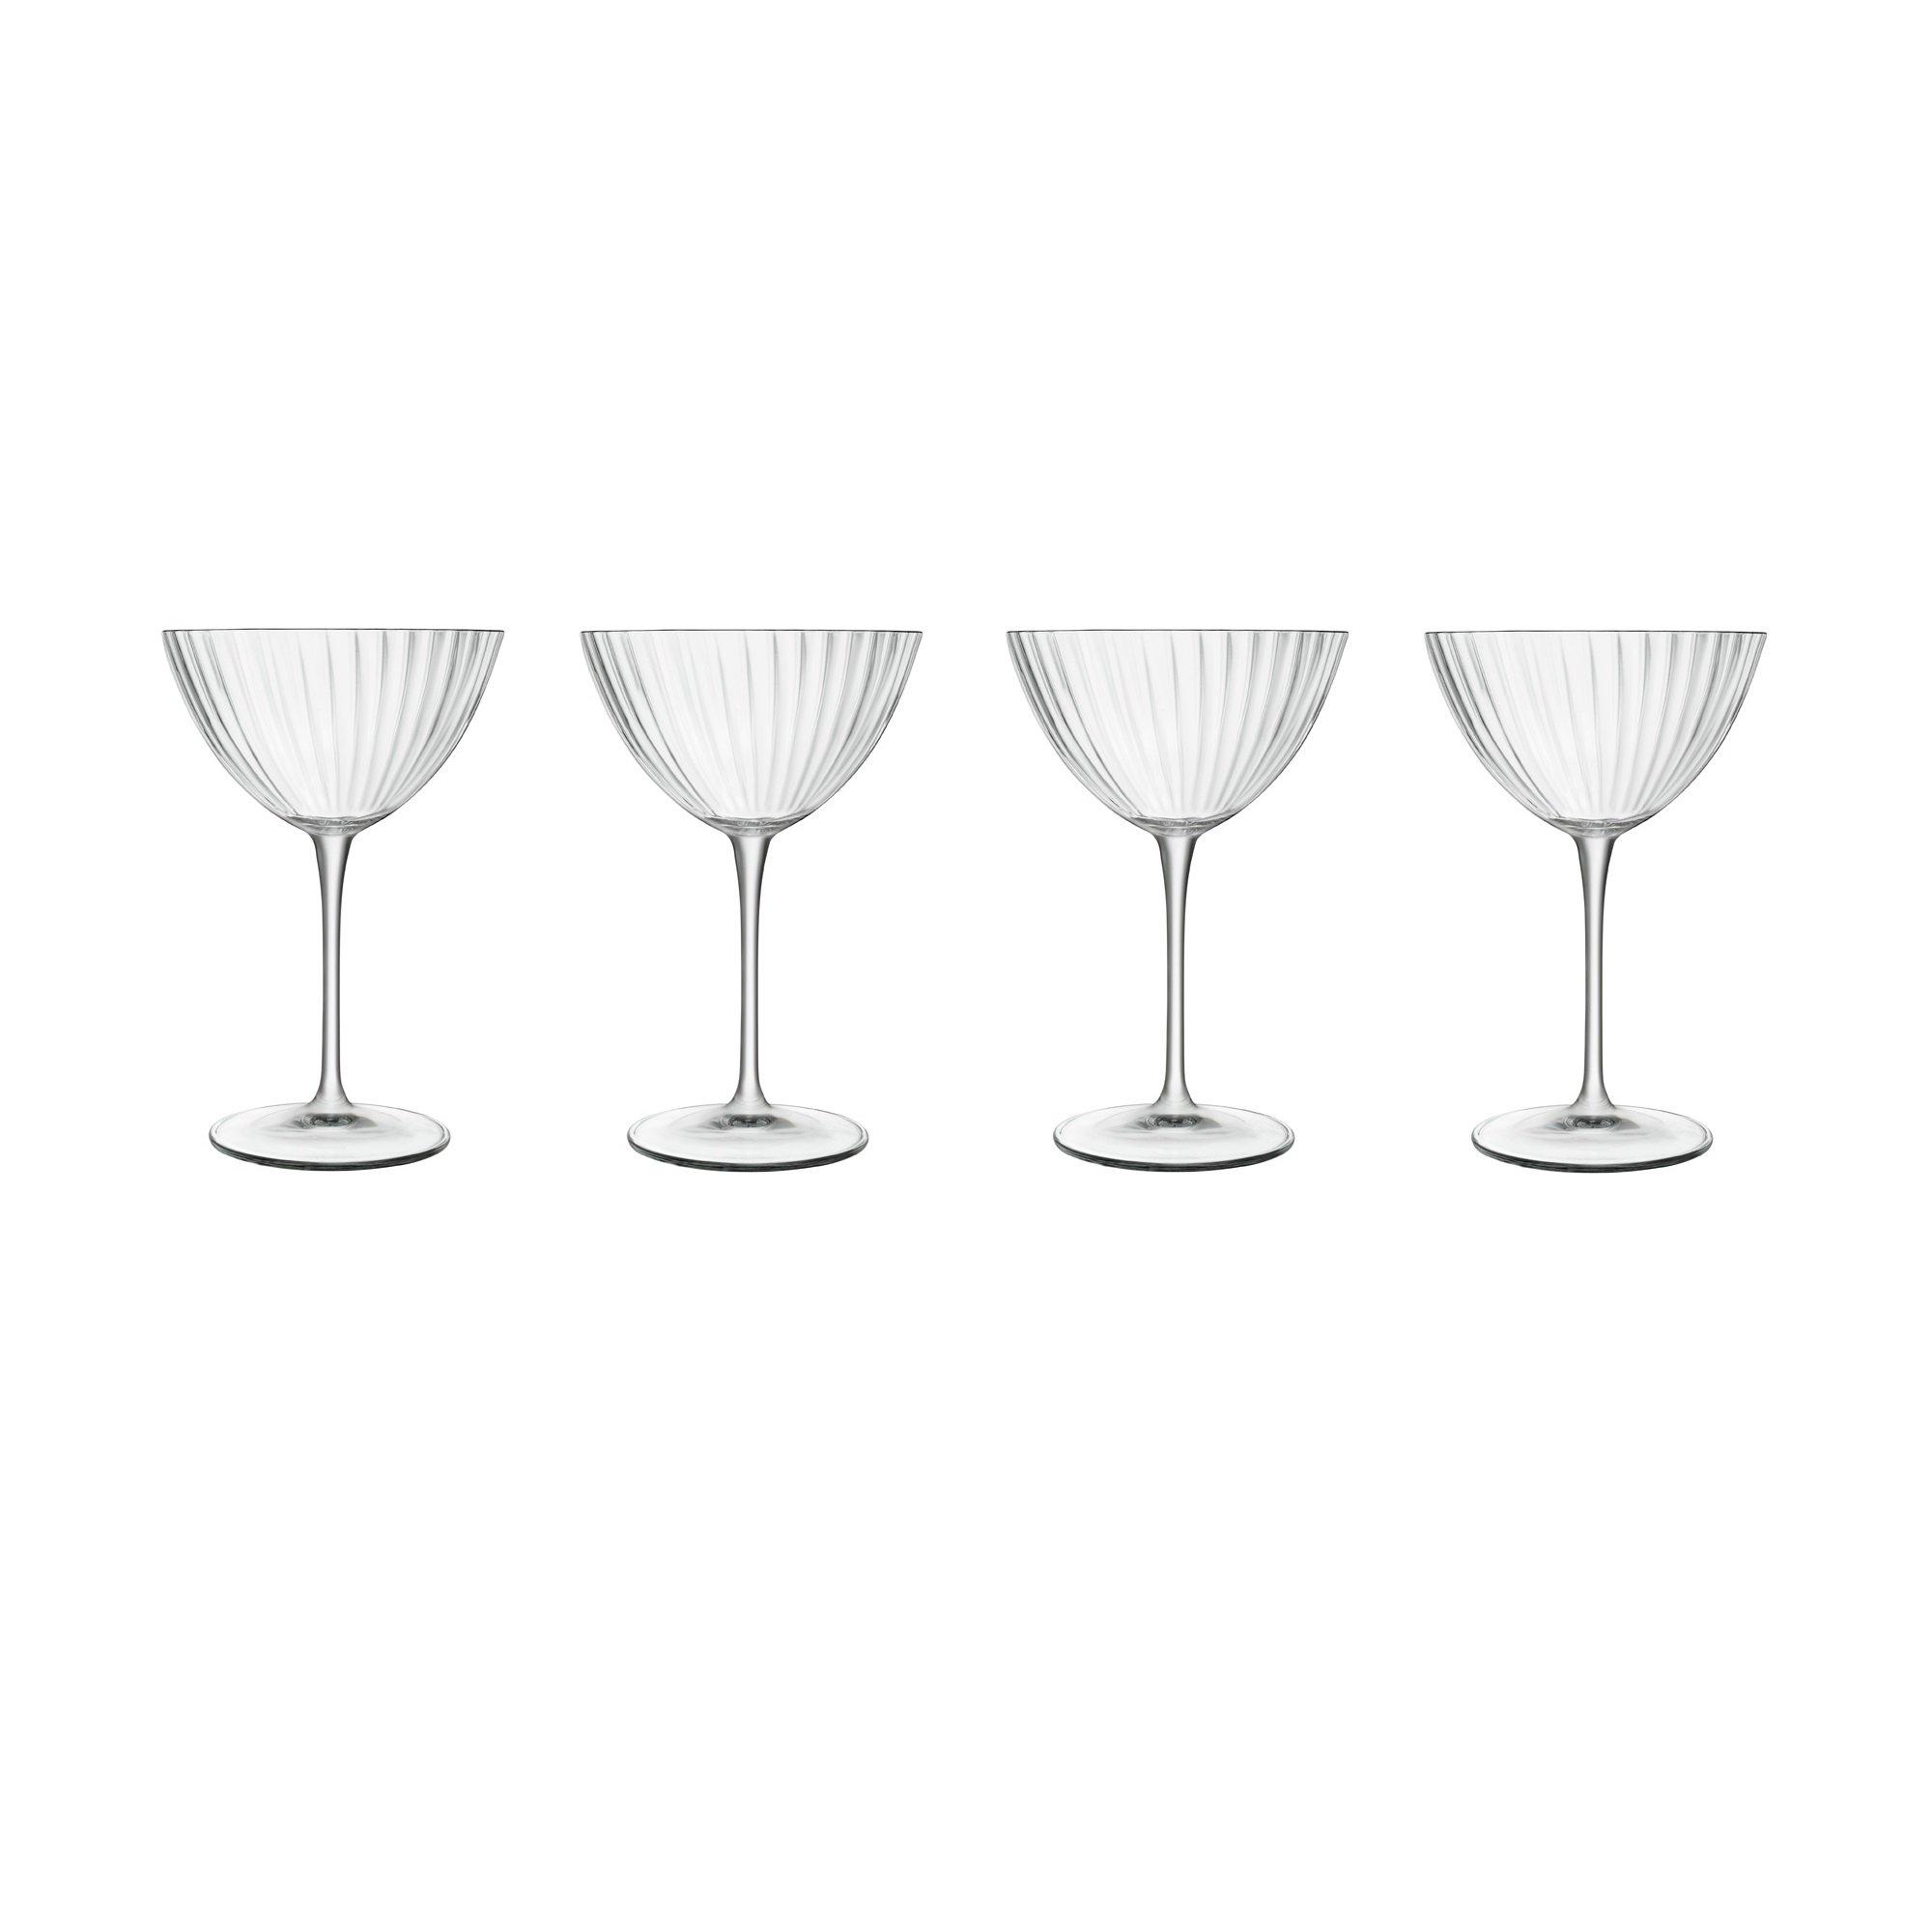 Optica Martini Glasses Crystal, Dishwasher Safe, Perfect Gift, Set of 4